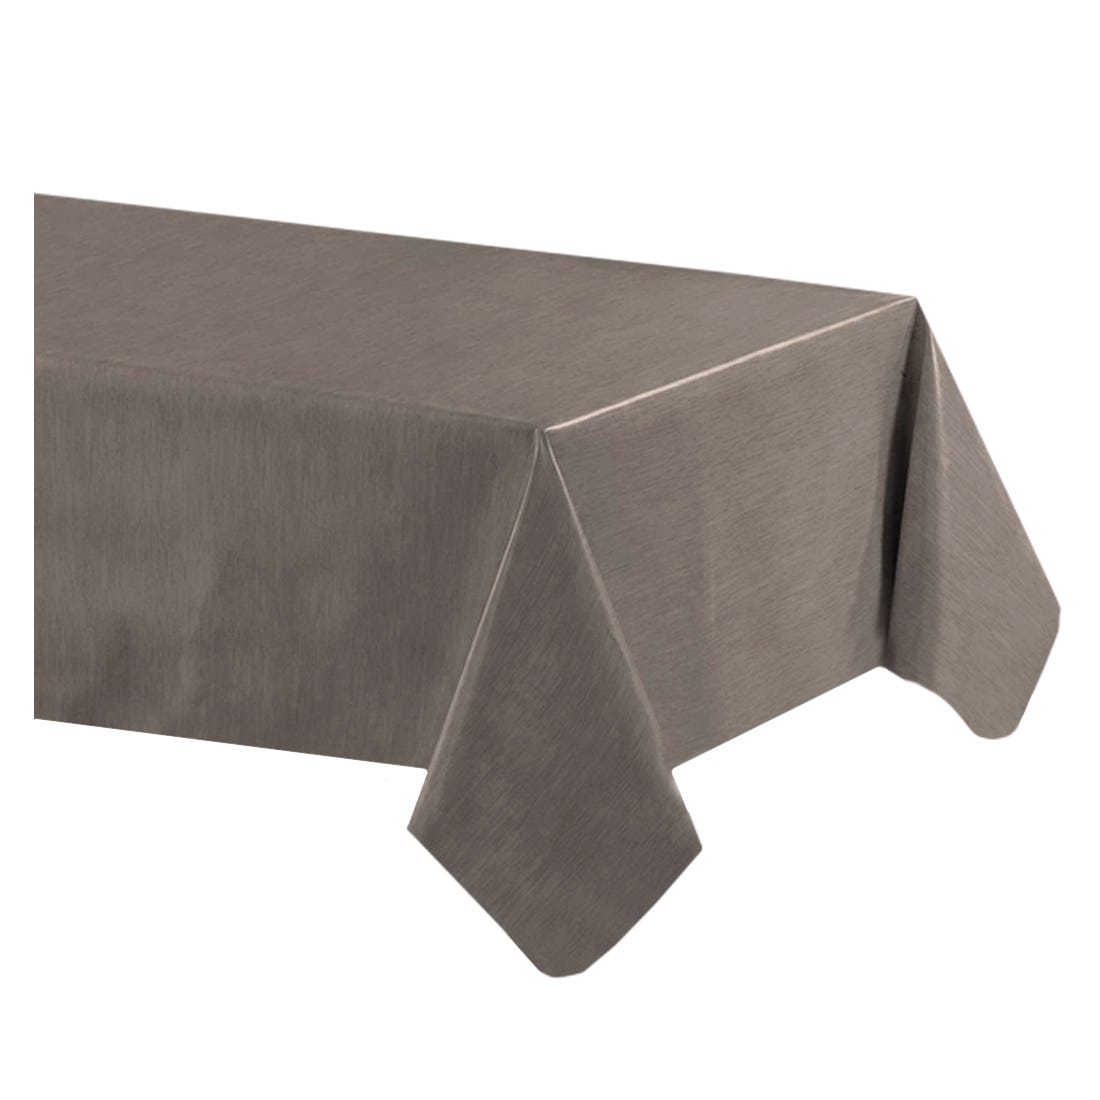 Acomoda Textil – Mantel Antimanchas Rectangular de Hule al Corte. Mantel  Liso Elegante, Impermeable, Resistente y Lavable. (Topo, 140x300 cm)